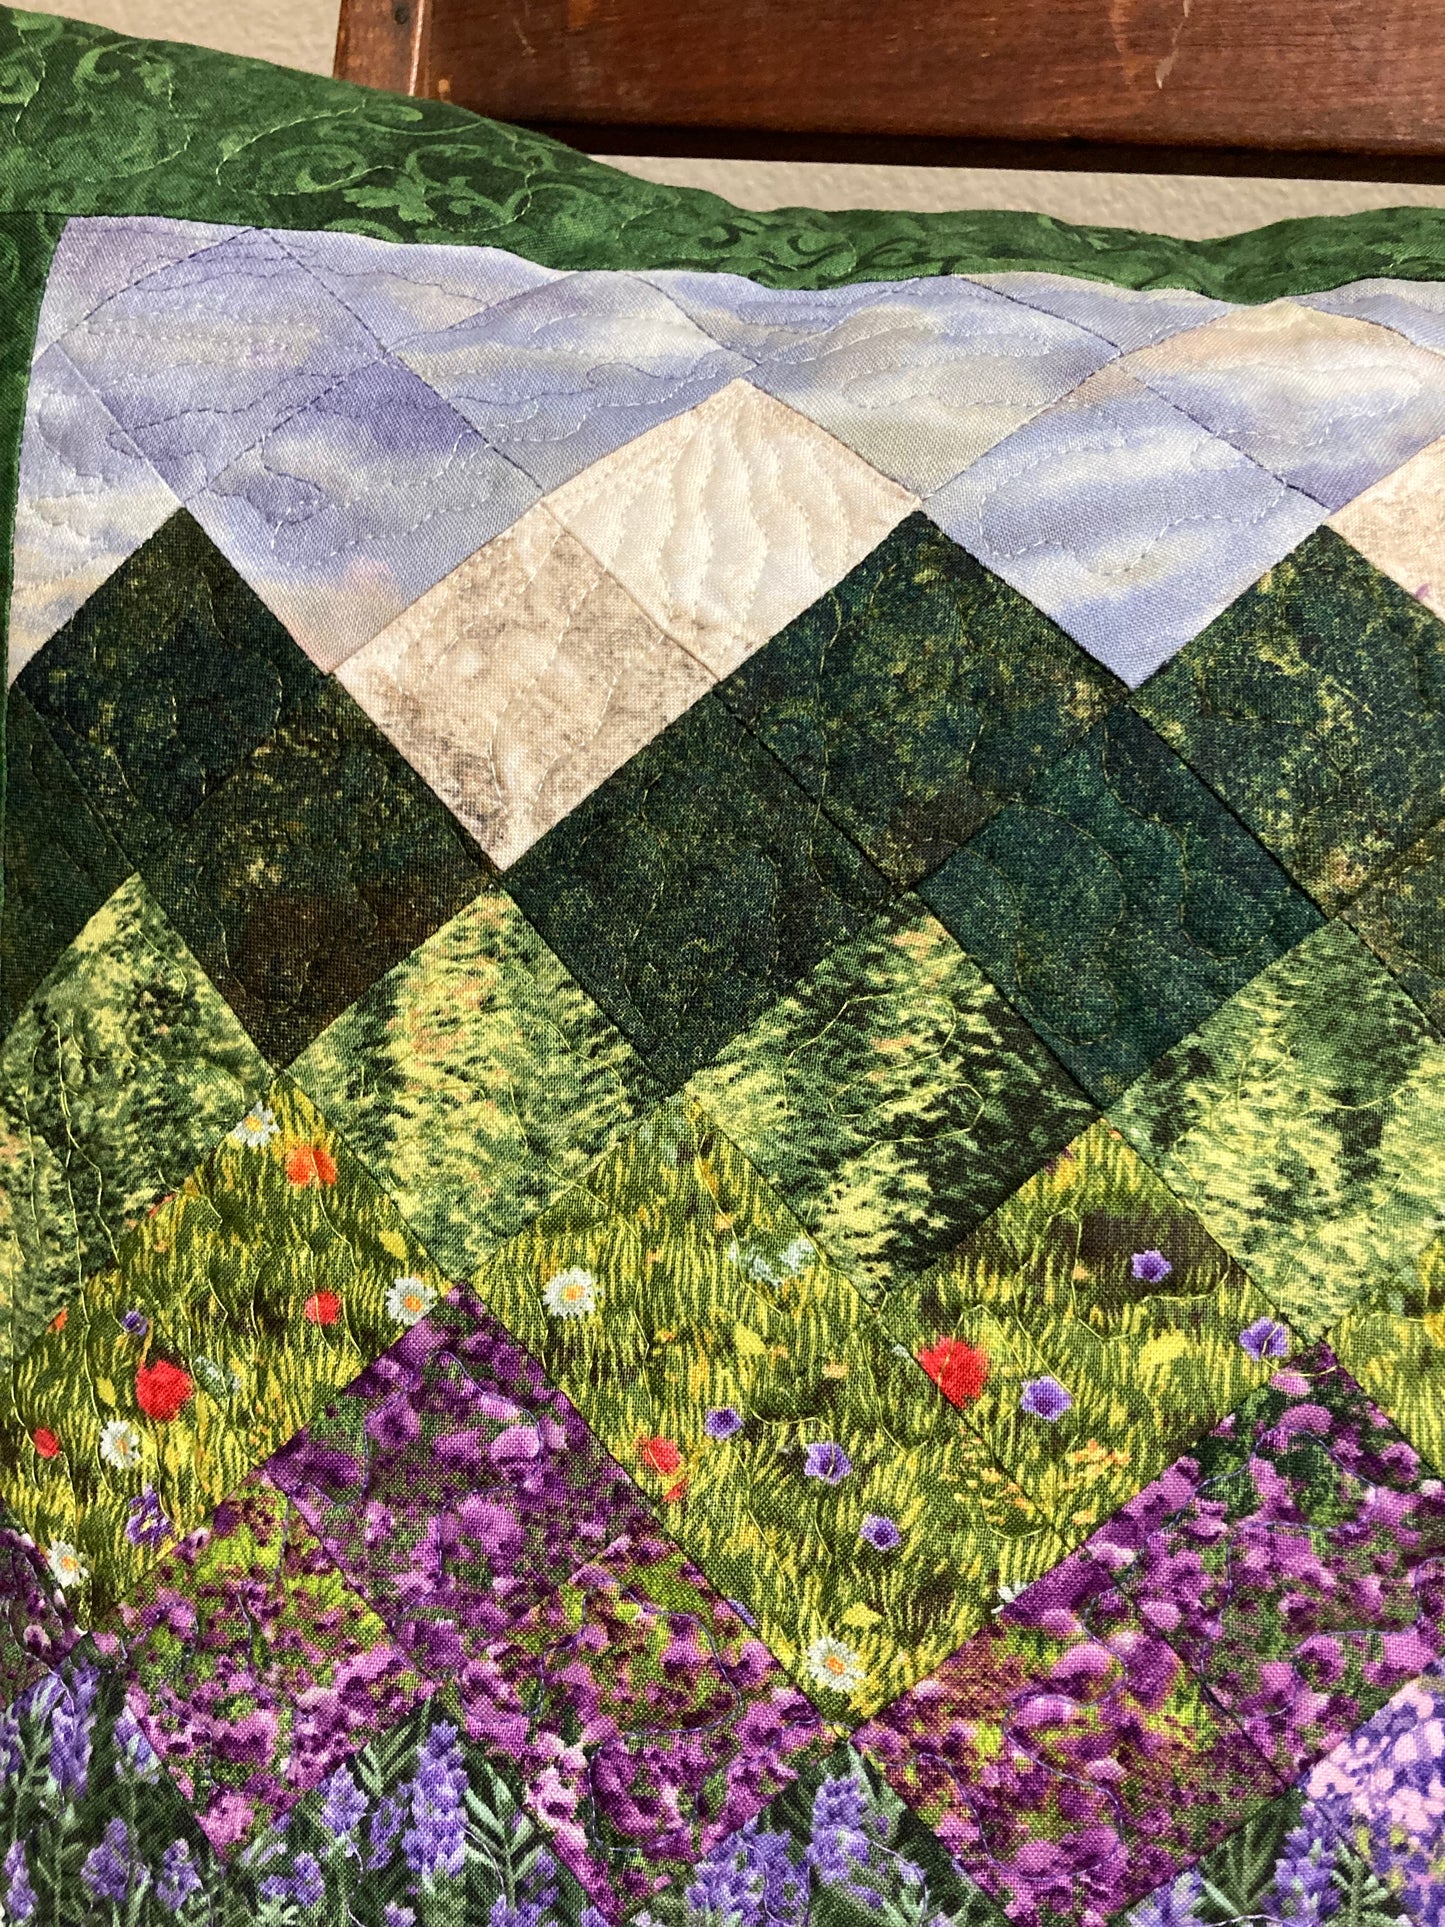 Mountain Decorative Pillow, Pink Purple Lupine Flowers, Dusky Sky Landscape Pillow 20x20", Cotton, Lake Tahoe Cabin Sofa Bedroom Living Room